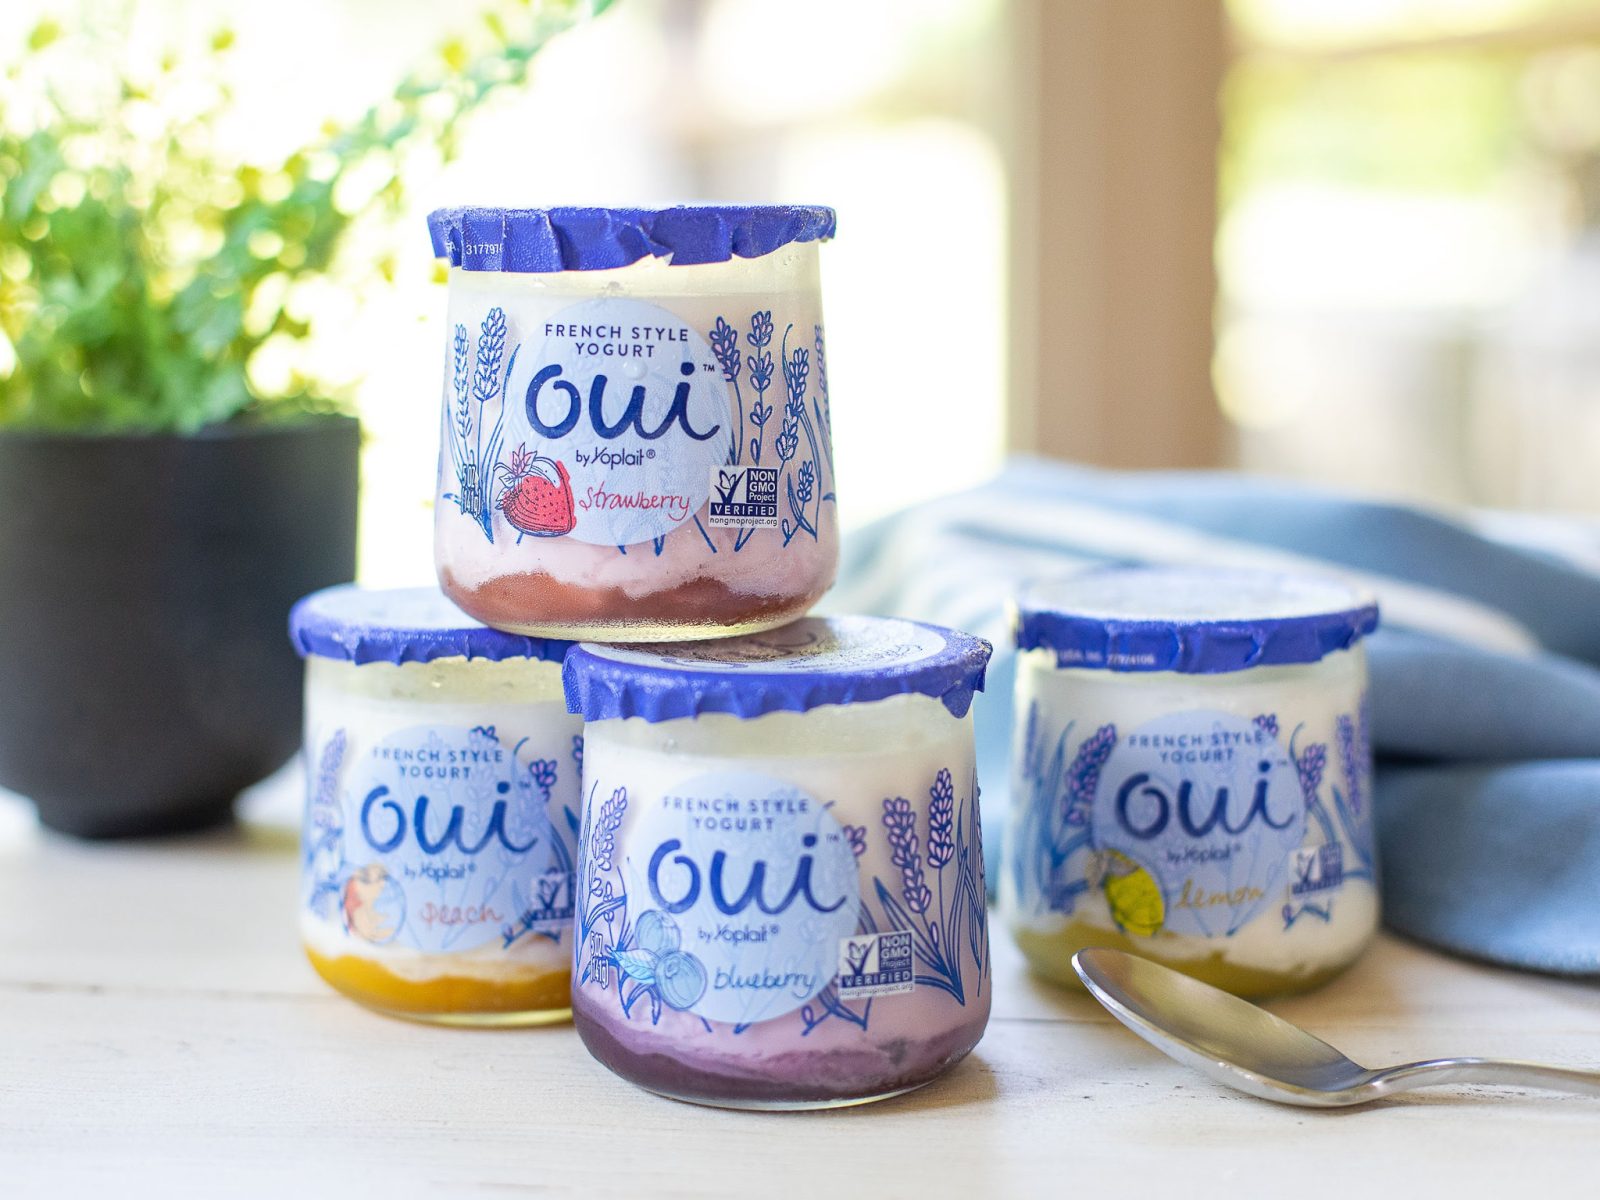 Oui by Yoplait French Style Yogurt Just $1 Per Jar At Kroger